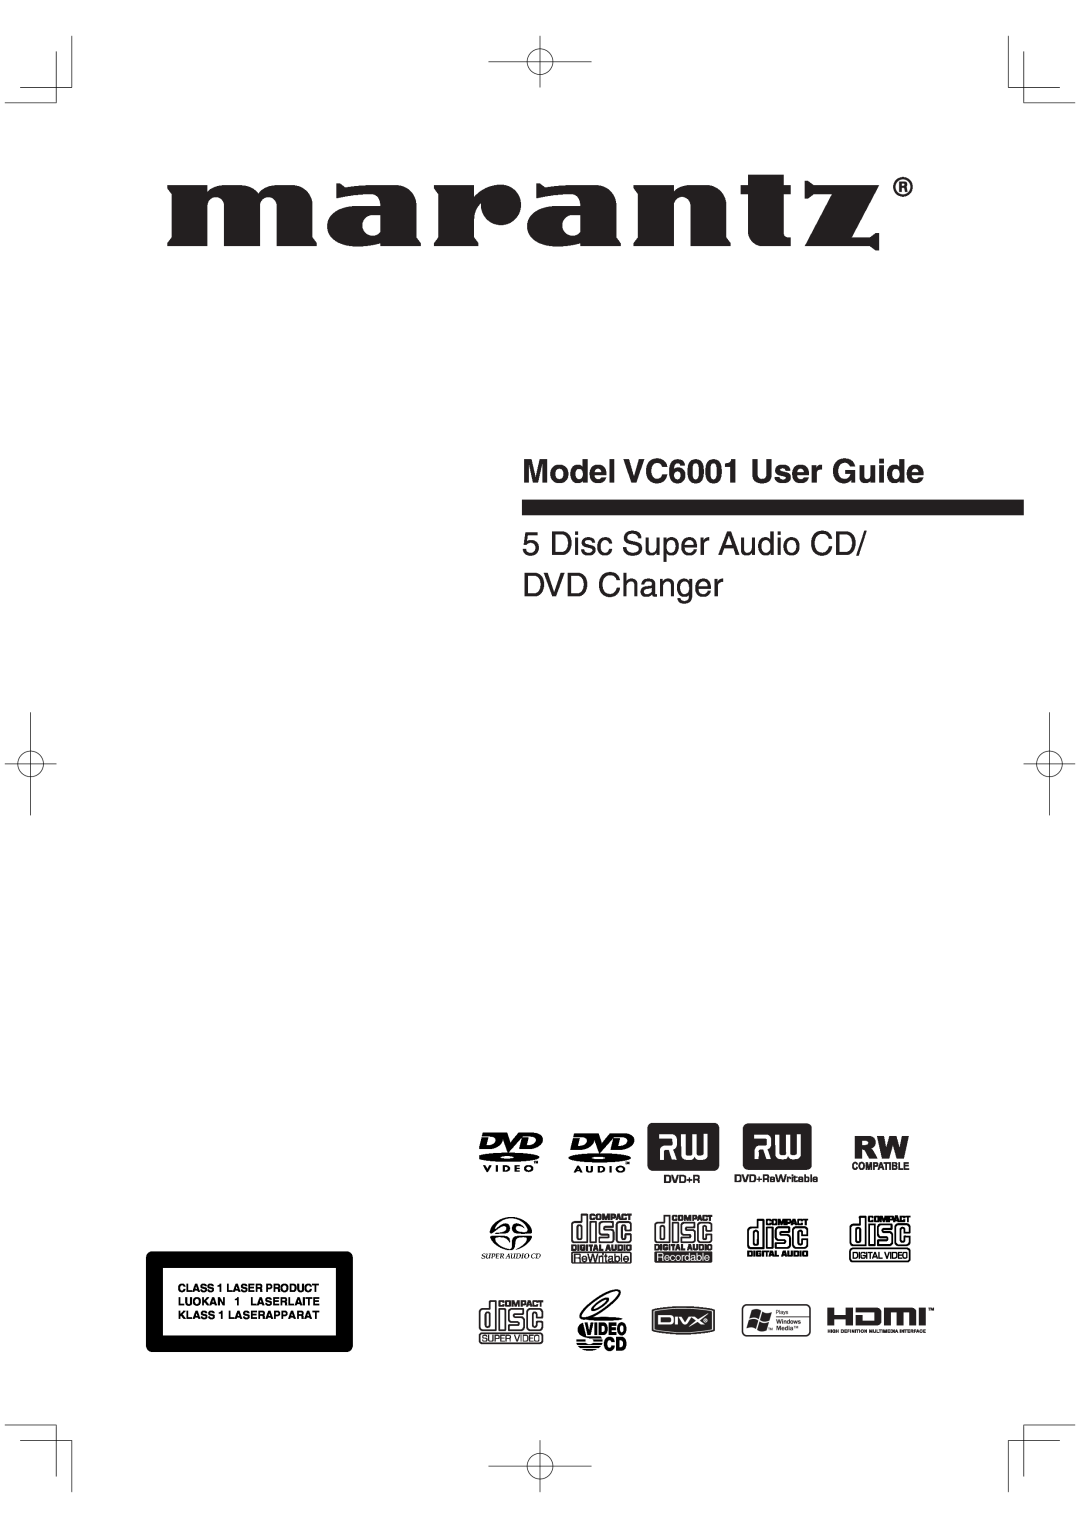 Marantz manual Model VC6001 User Guide, Disc Super Audio CD DVD Changer 